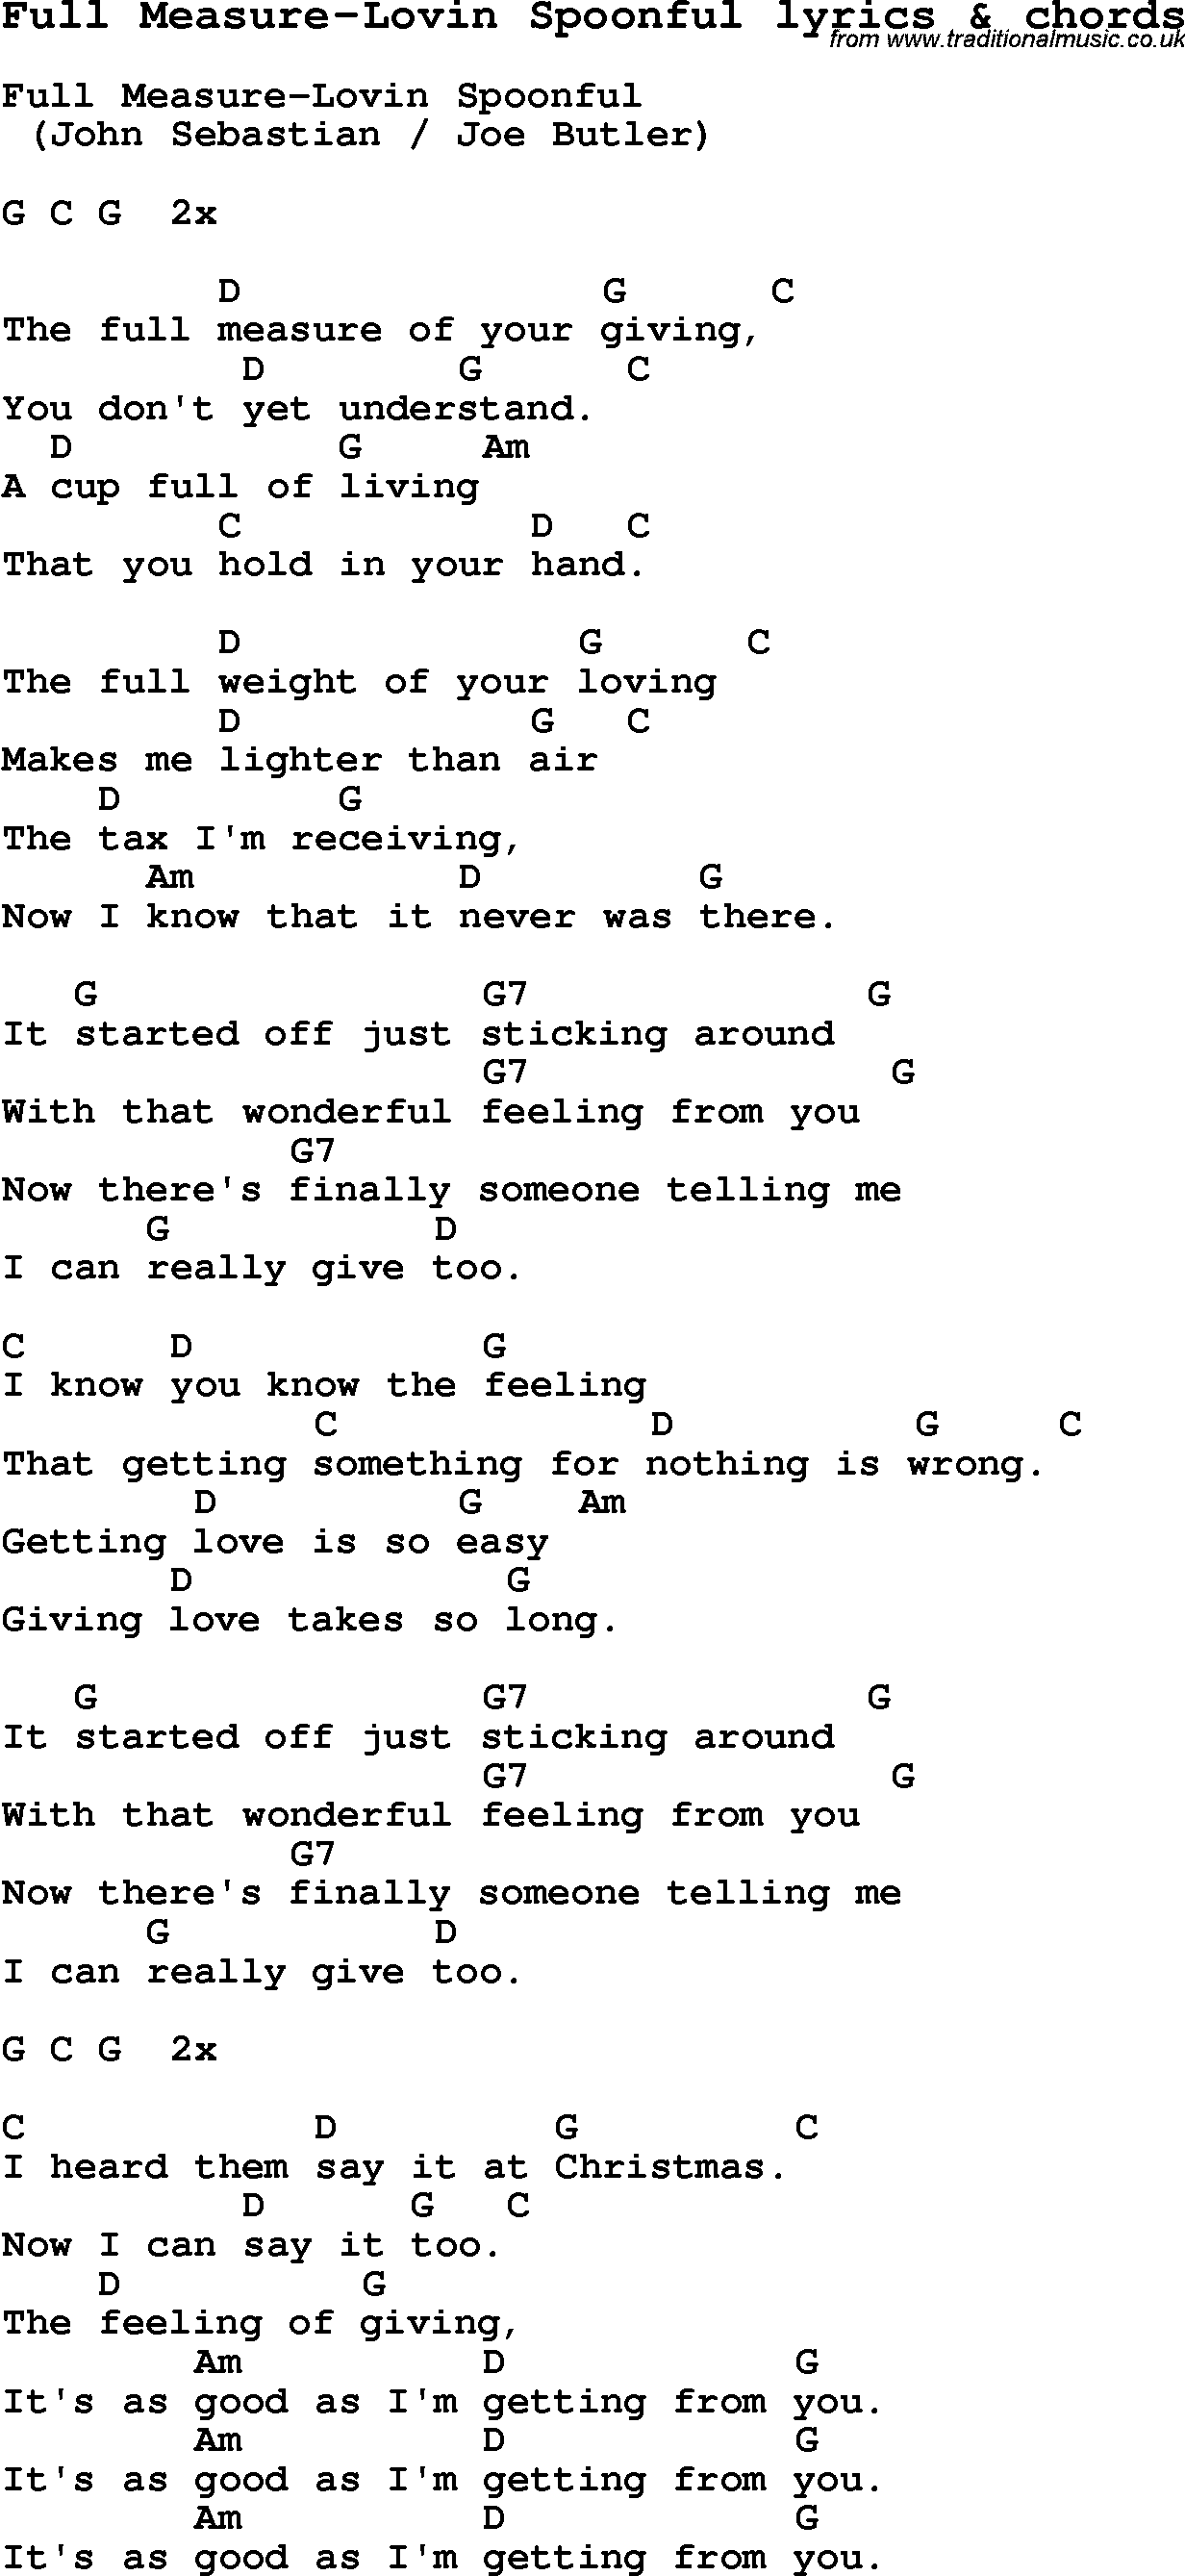 Love Song Lyrics for: Full Measure-Lovin Spoonful with chords for Ukulele, Guitar Banjo etc.